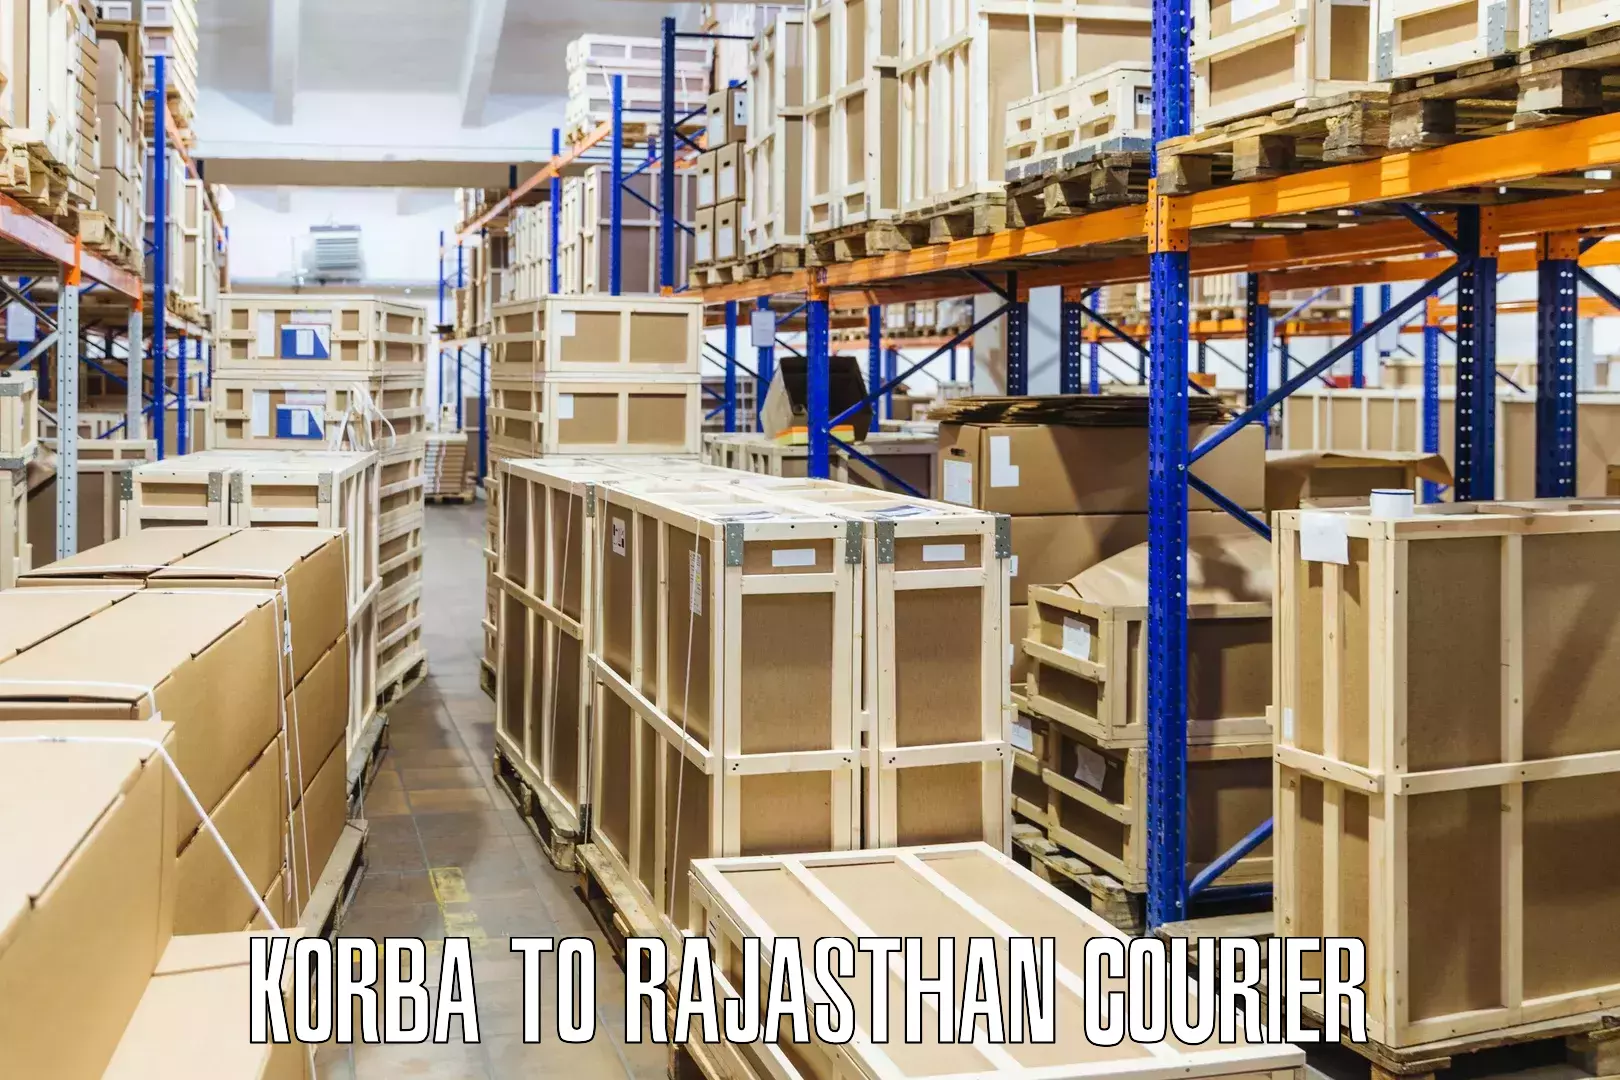 Advanced shipping technology Korba to Gotan